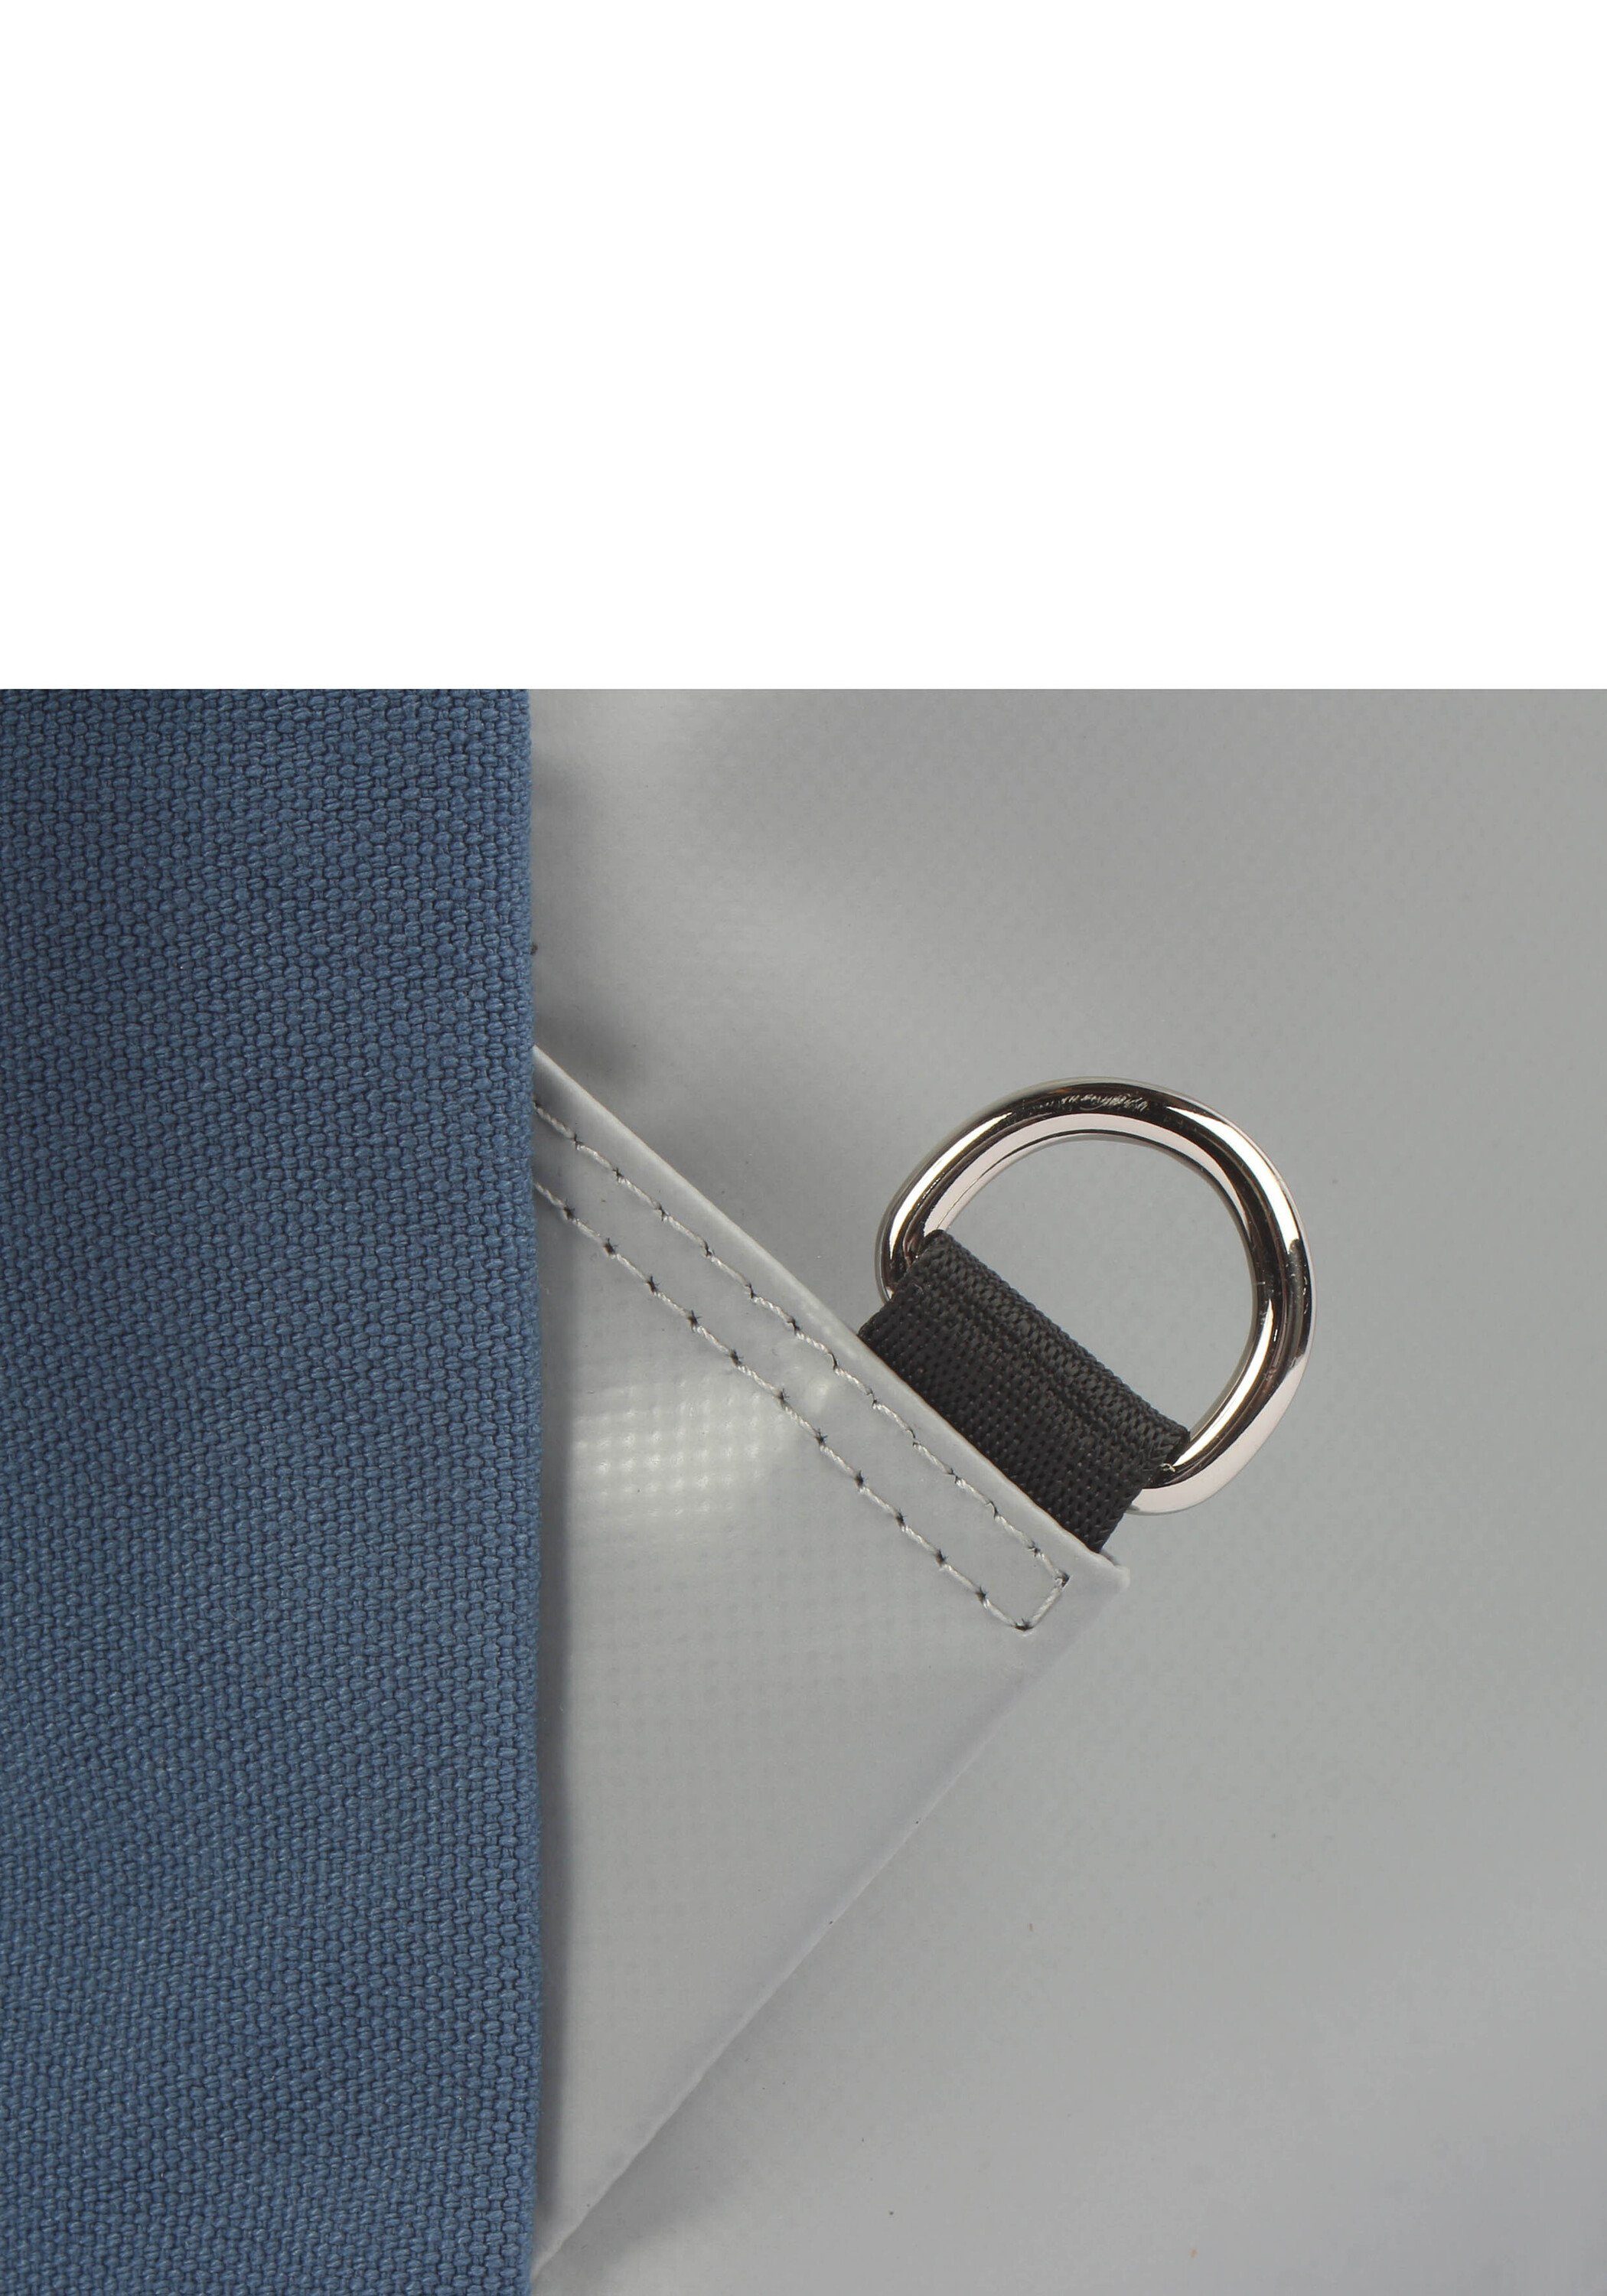 fairer aus Produktion Mendo 7.4, 7clouds Cityrucksack grau-weiss-blau Artikel